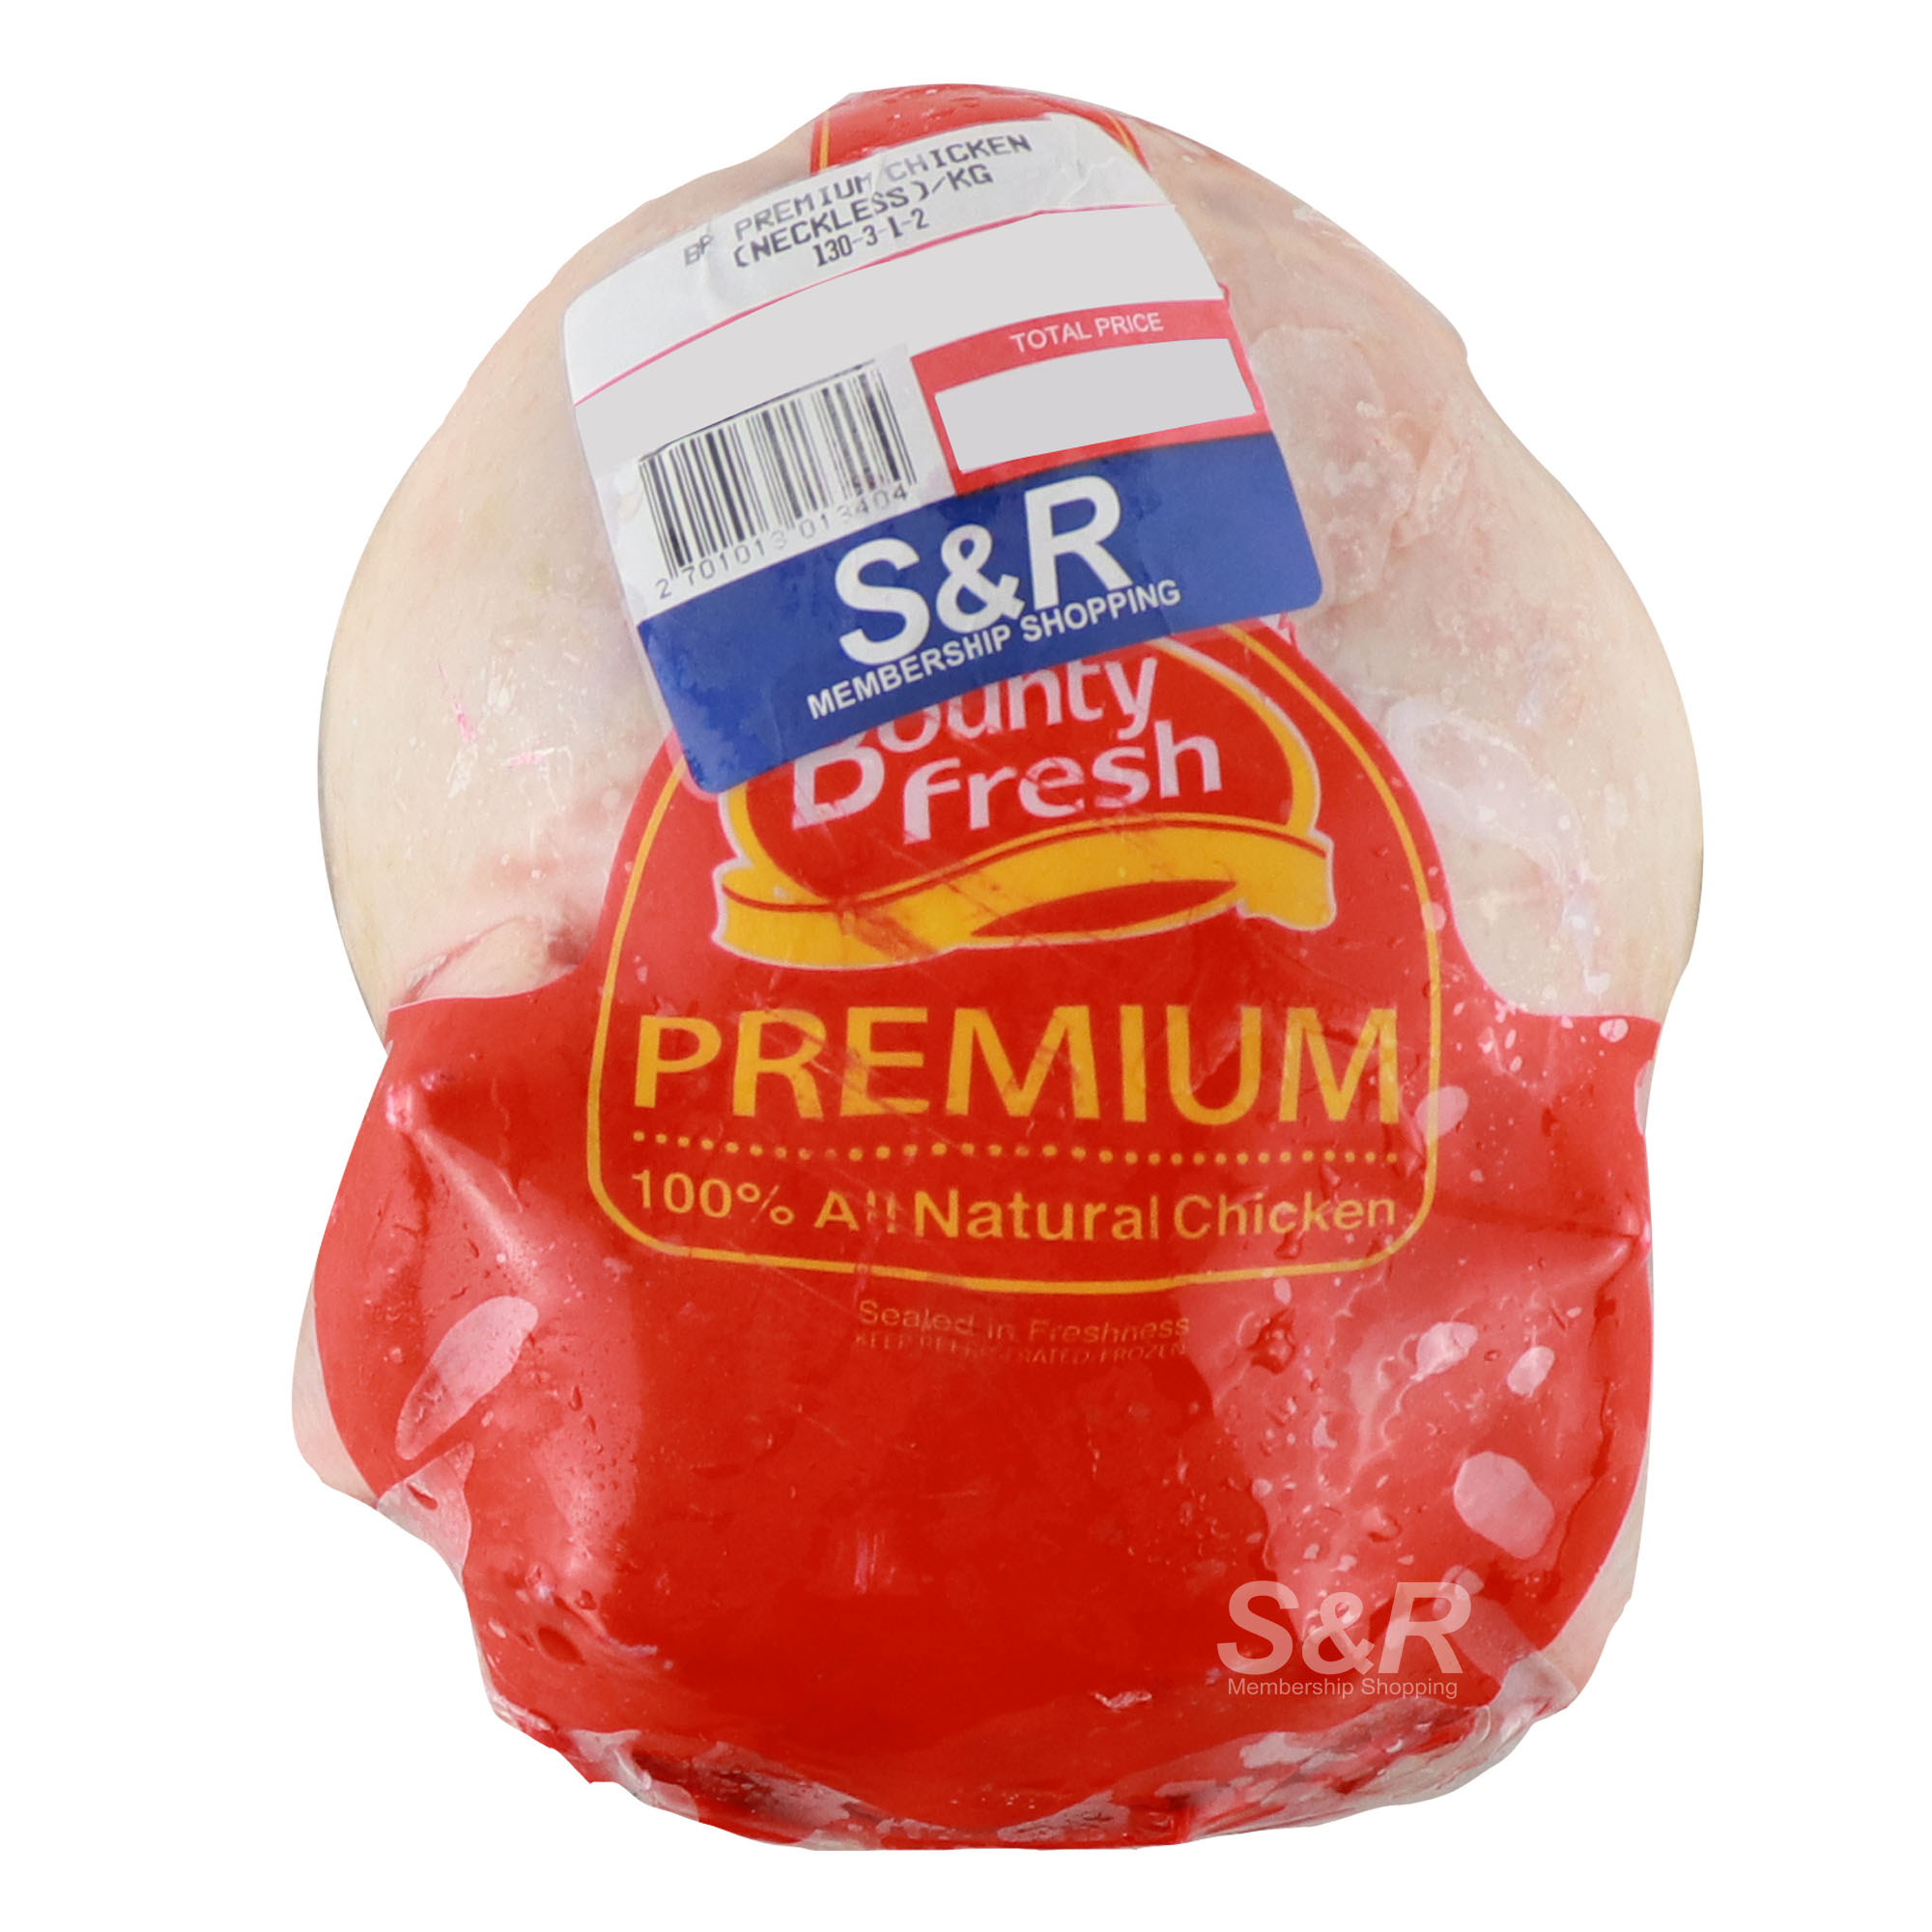 Bounty Fresh Premium Whole Chicken approx. 1.5kg